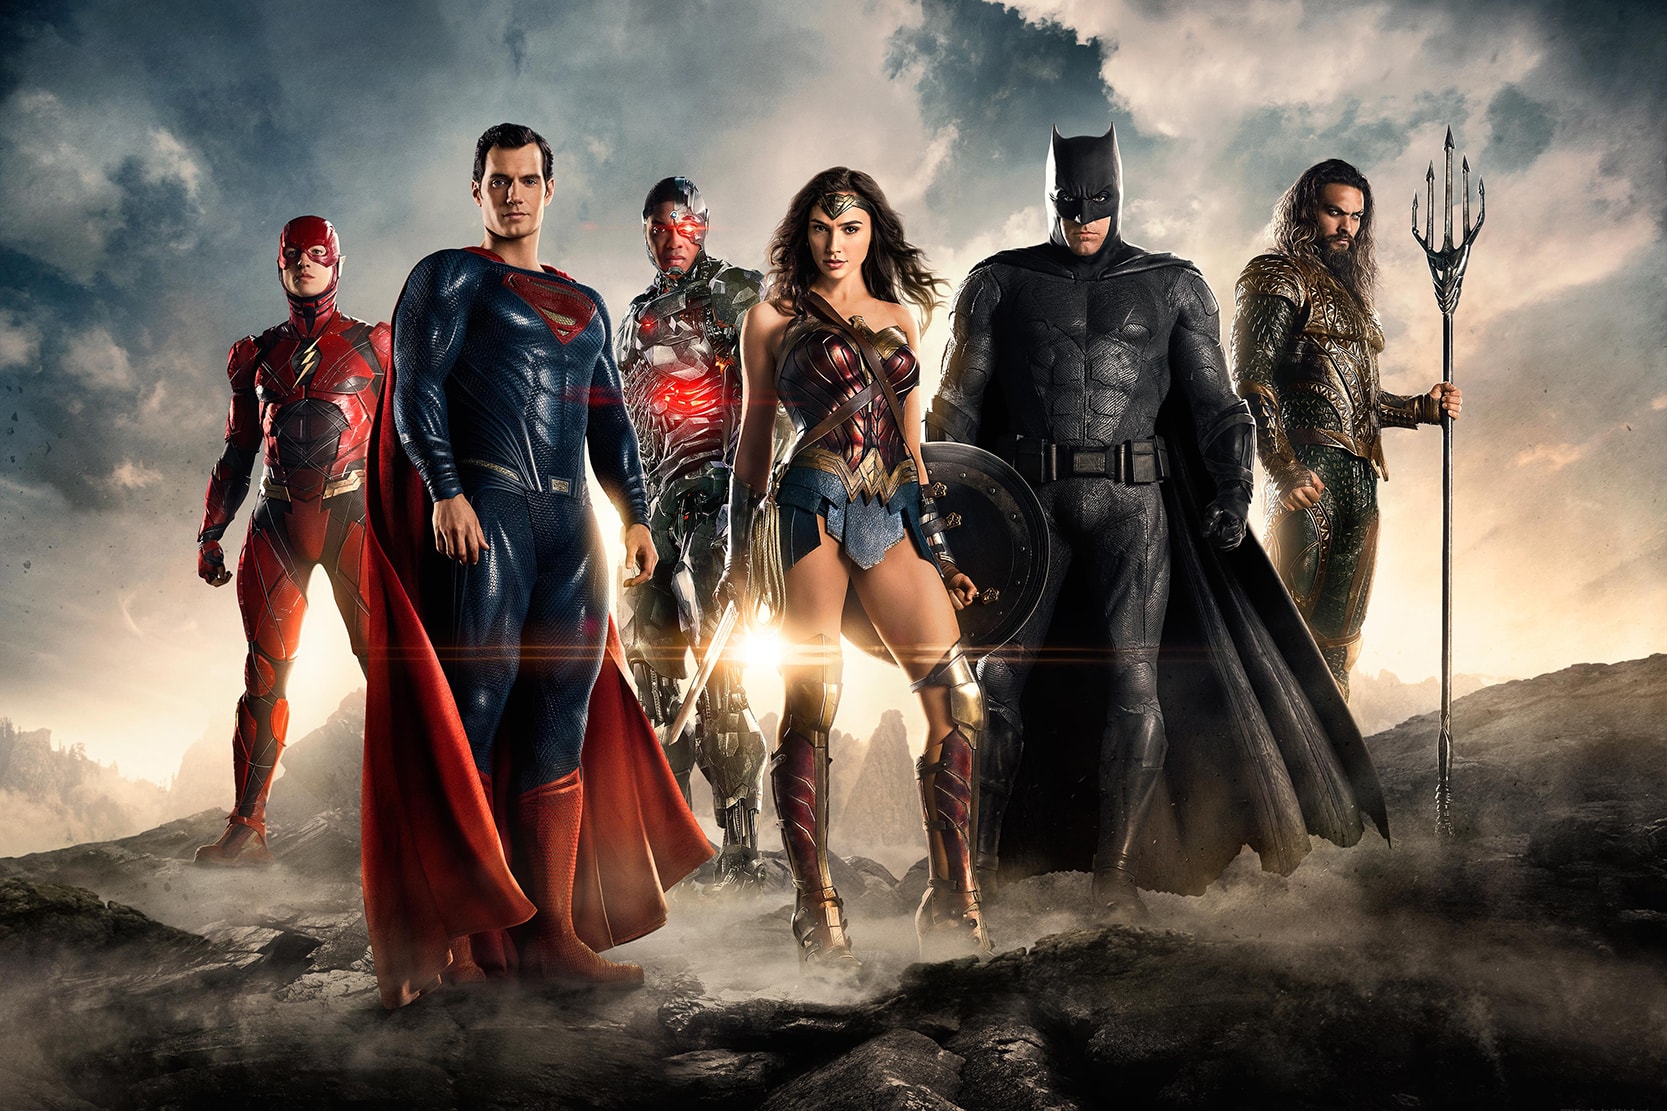 Justice League Lowest Grossing DC Universe Movie Films  Warner Bros Wonder Woman Batman Aquaman The Flash Cyborg Gal Gadot Ben Affleck Henry Cavill Jason Momoa Ezra Miller